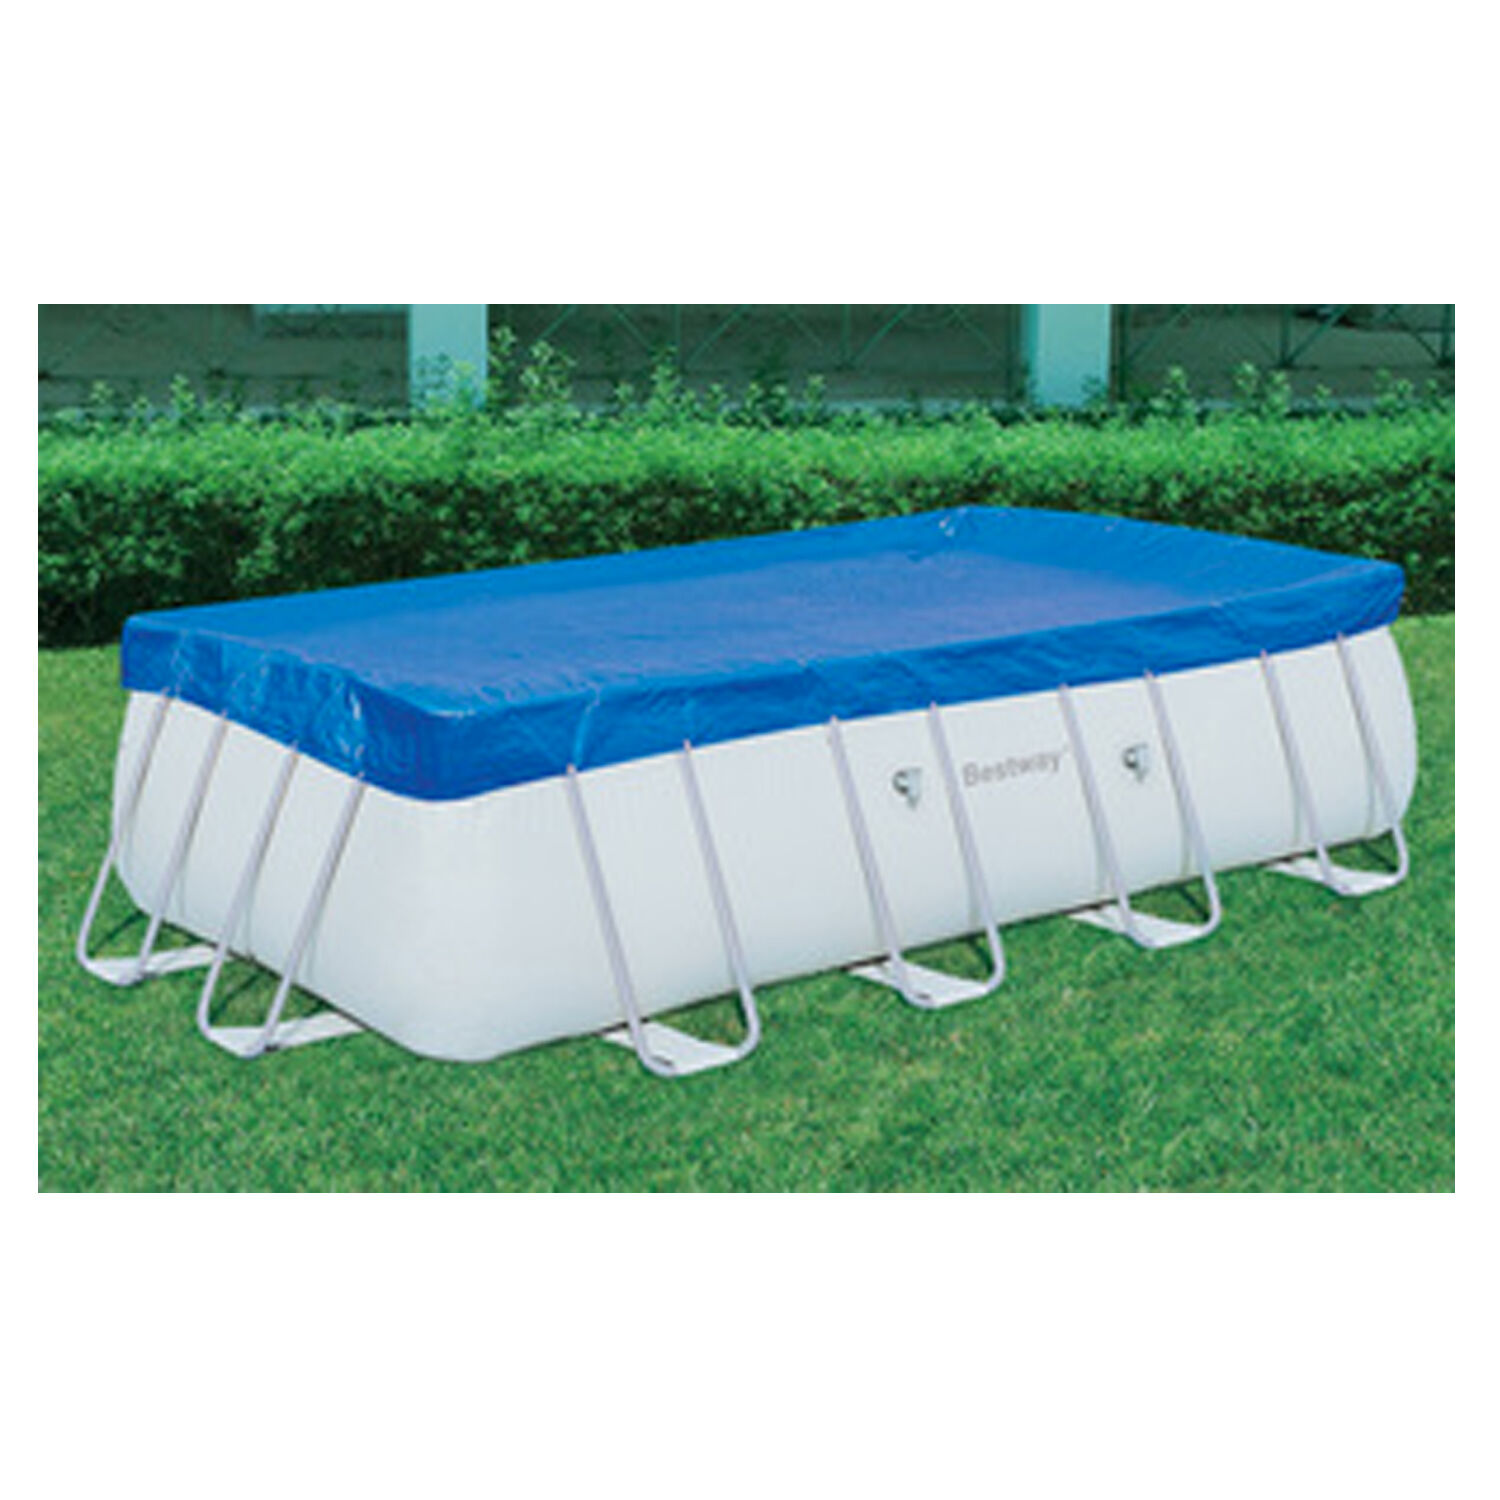 CeramicStore Top di copertura 396x185 cm ideale per alcune piscine rettangolari